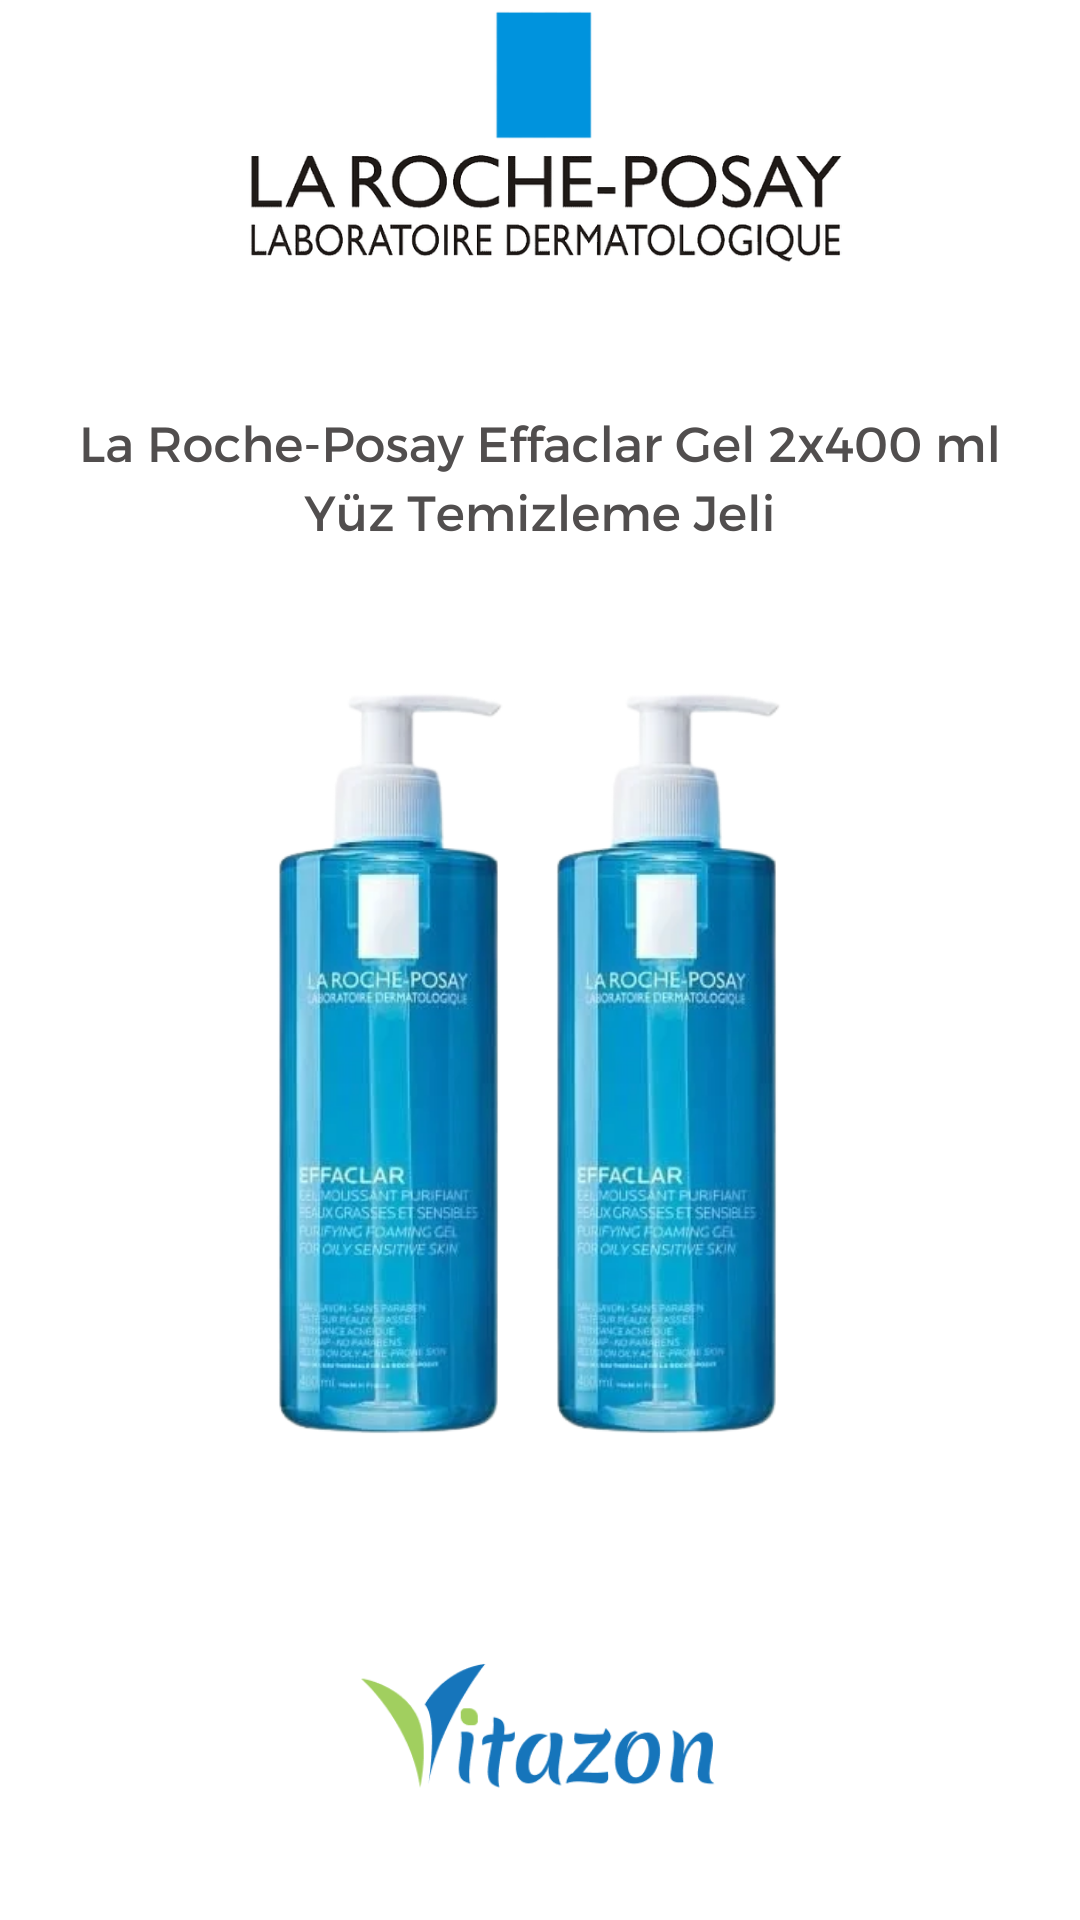 La Roche-Posay Effaclar Gel 2x400 ml Yüz Temizleme Jeli